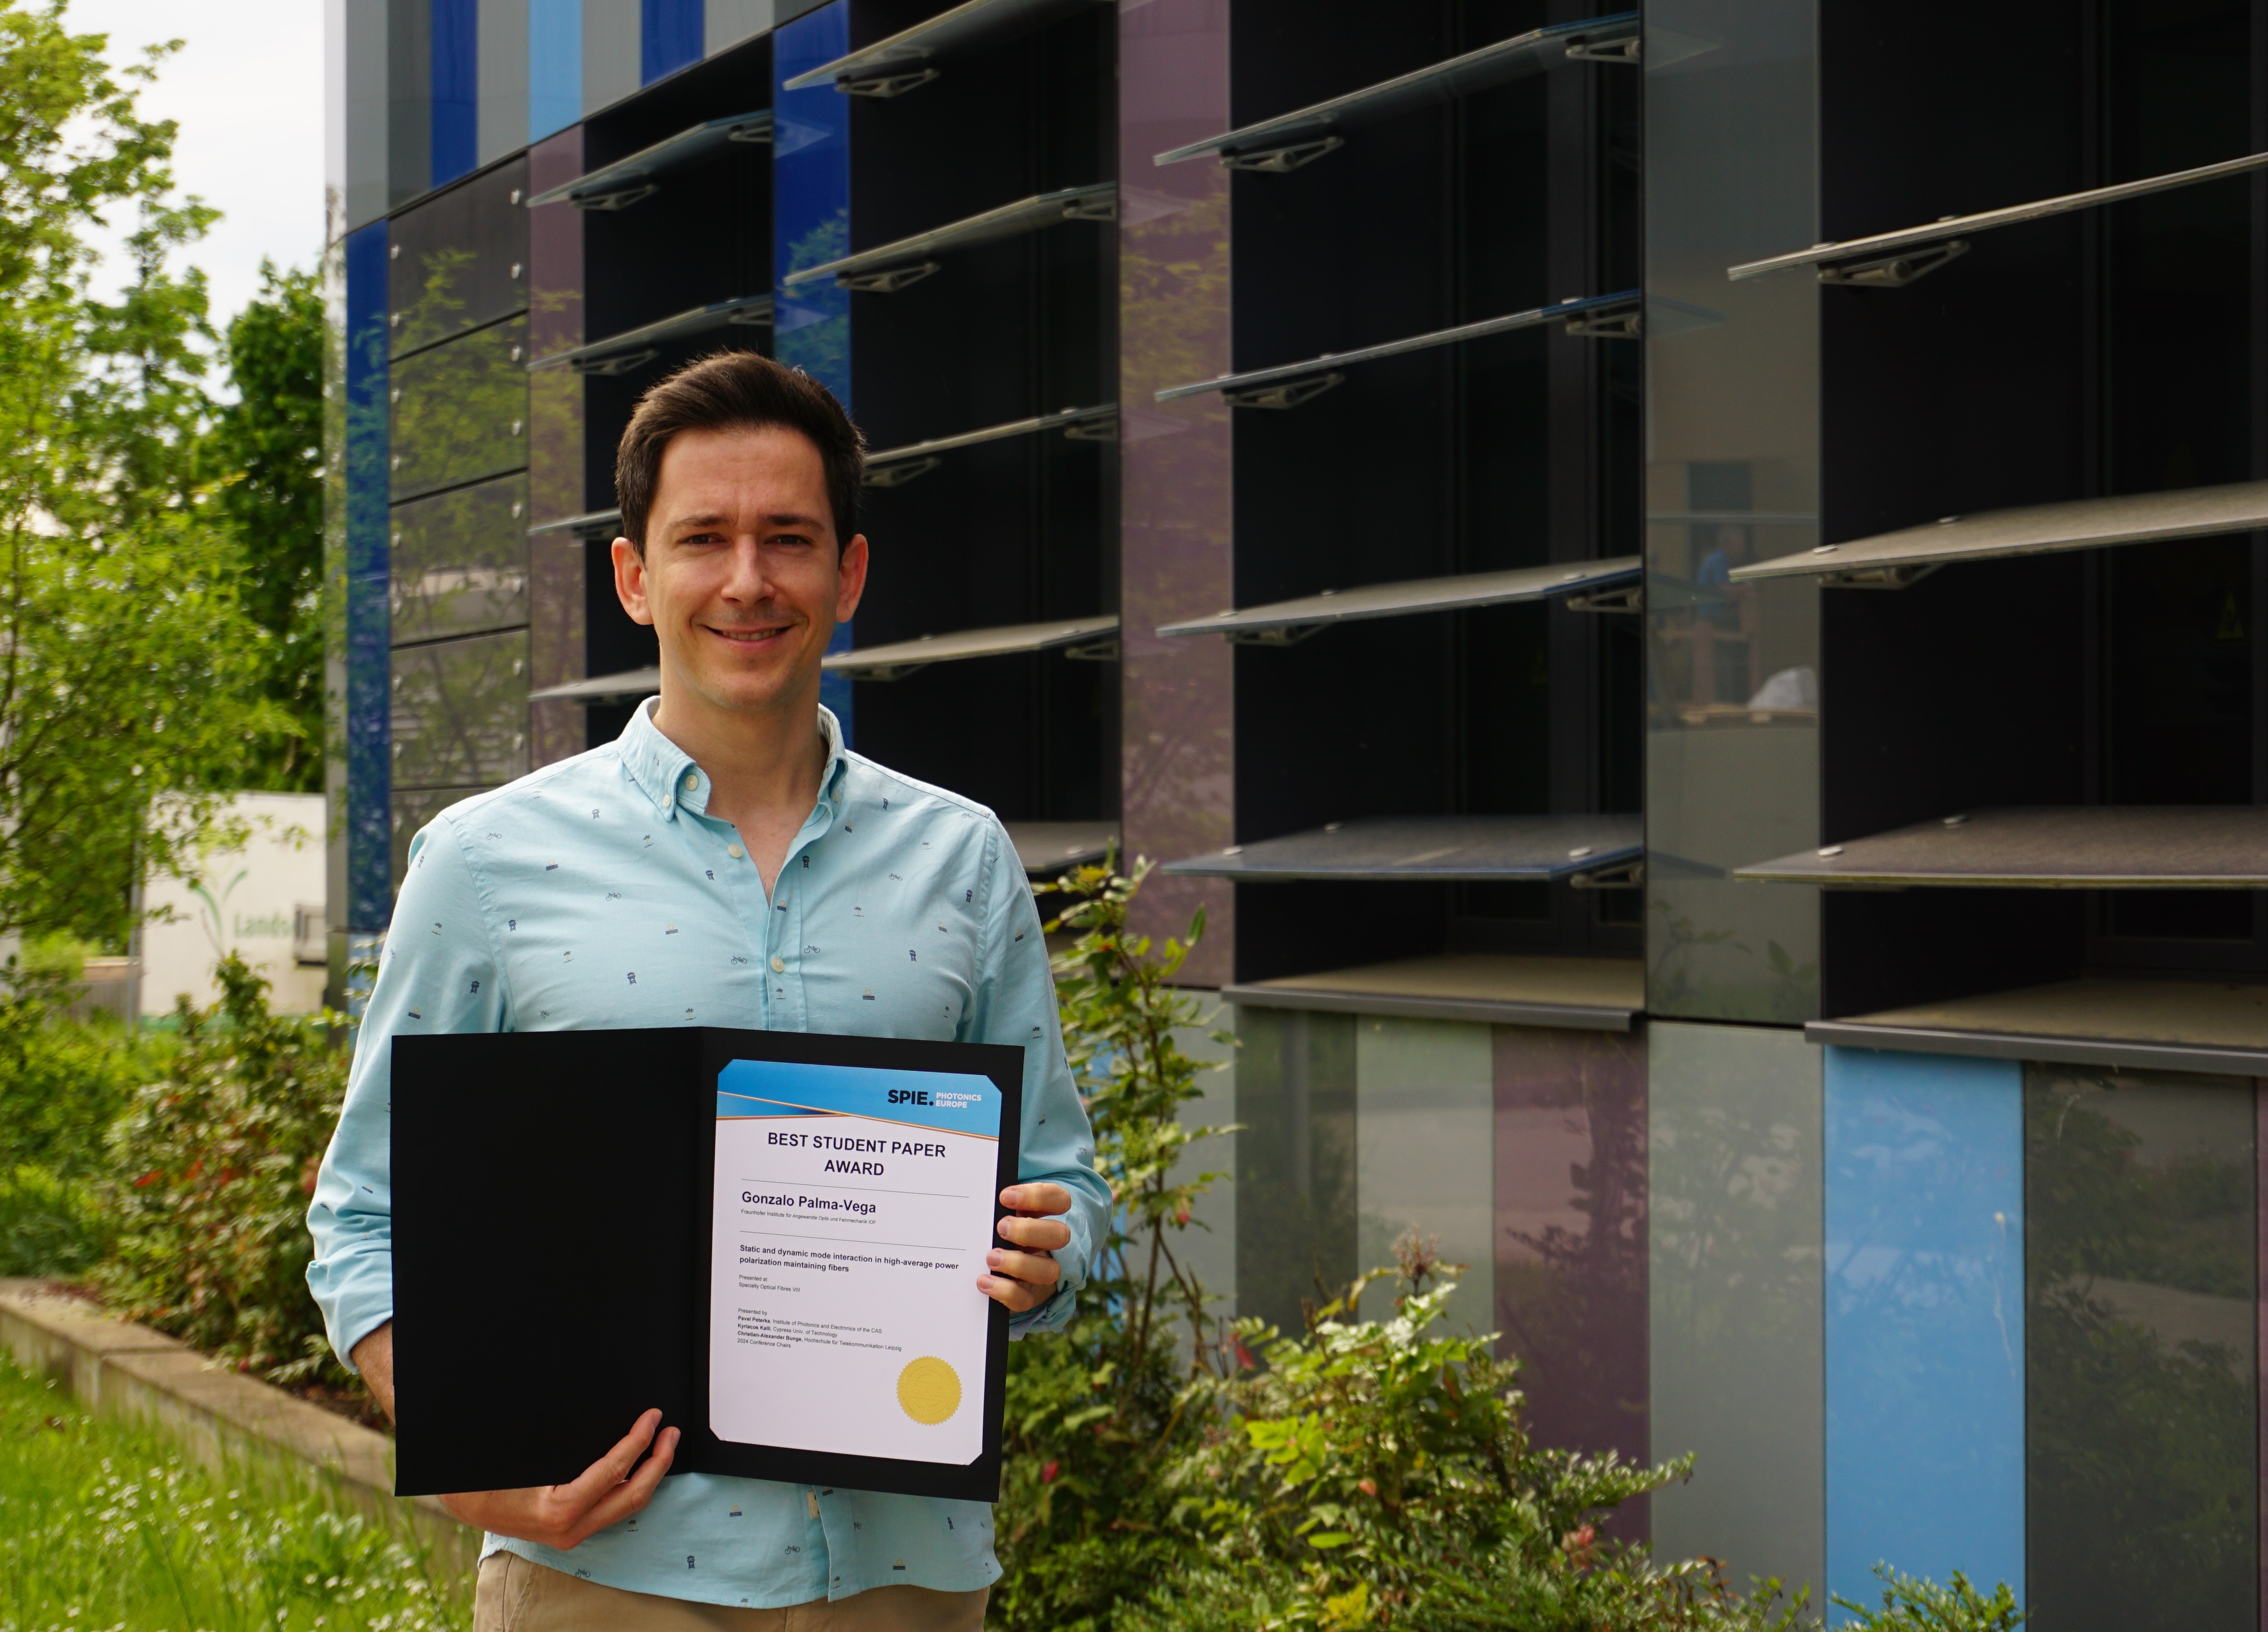 Gonzalo Palma Vega – winner of the “Best Student Paper Award”